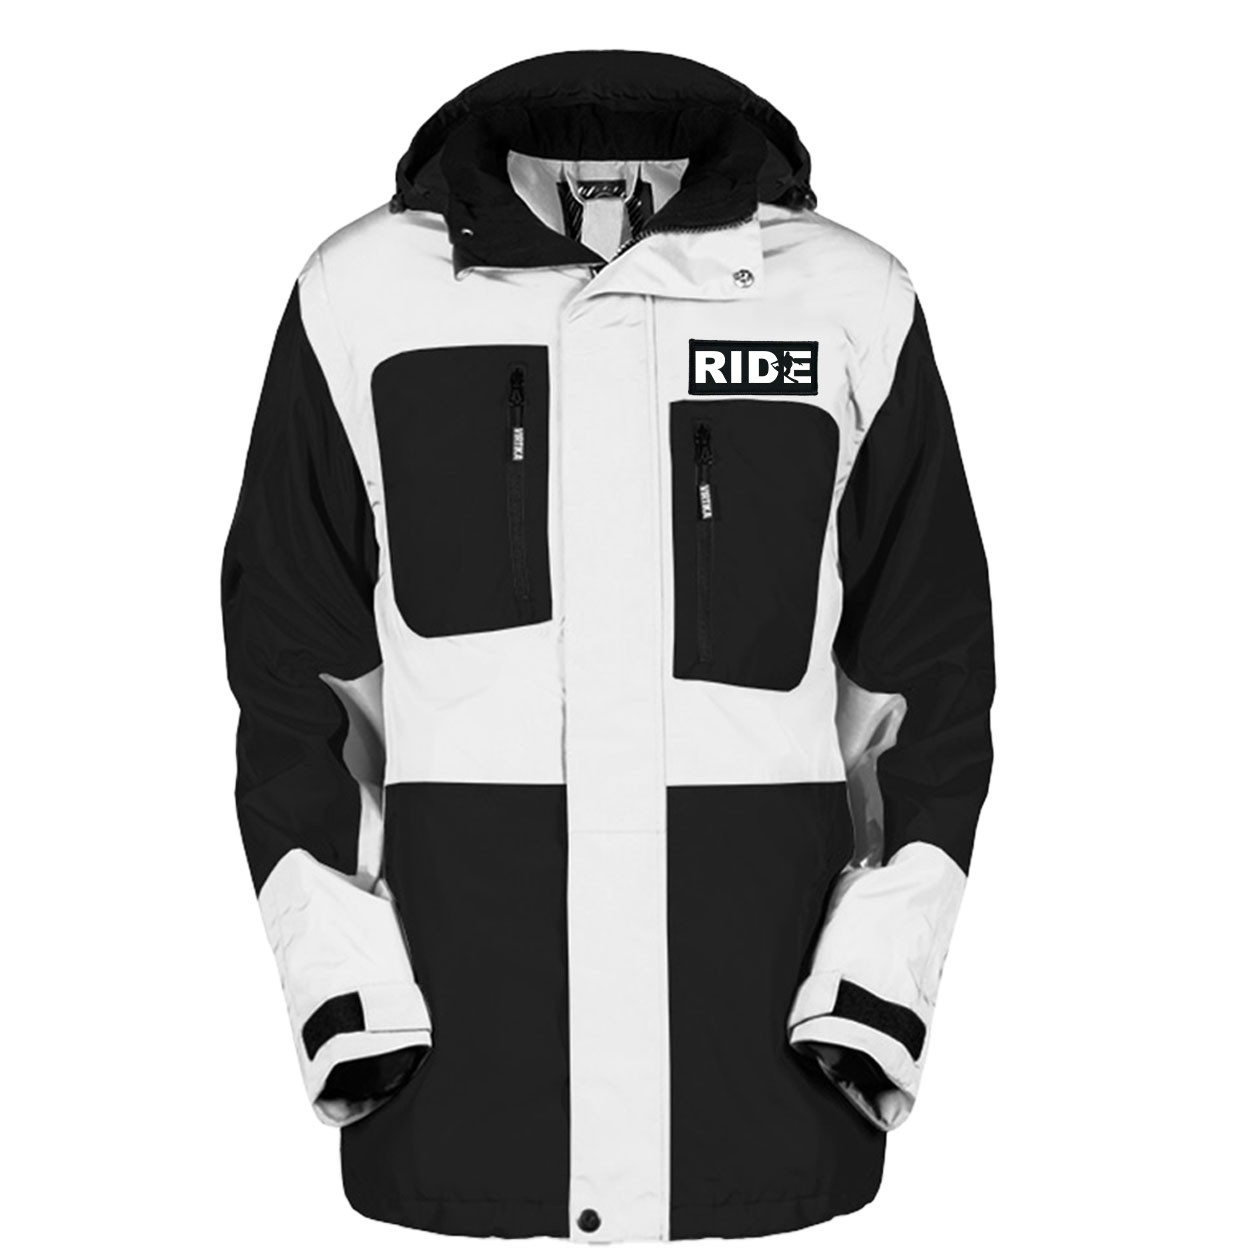 Ride Snowboard Logo Pro Waterproof Breathable Winter Virtika Jacket Black/White (White Logo)